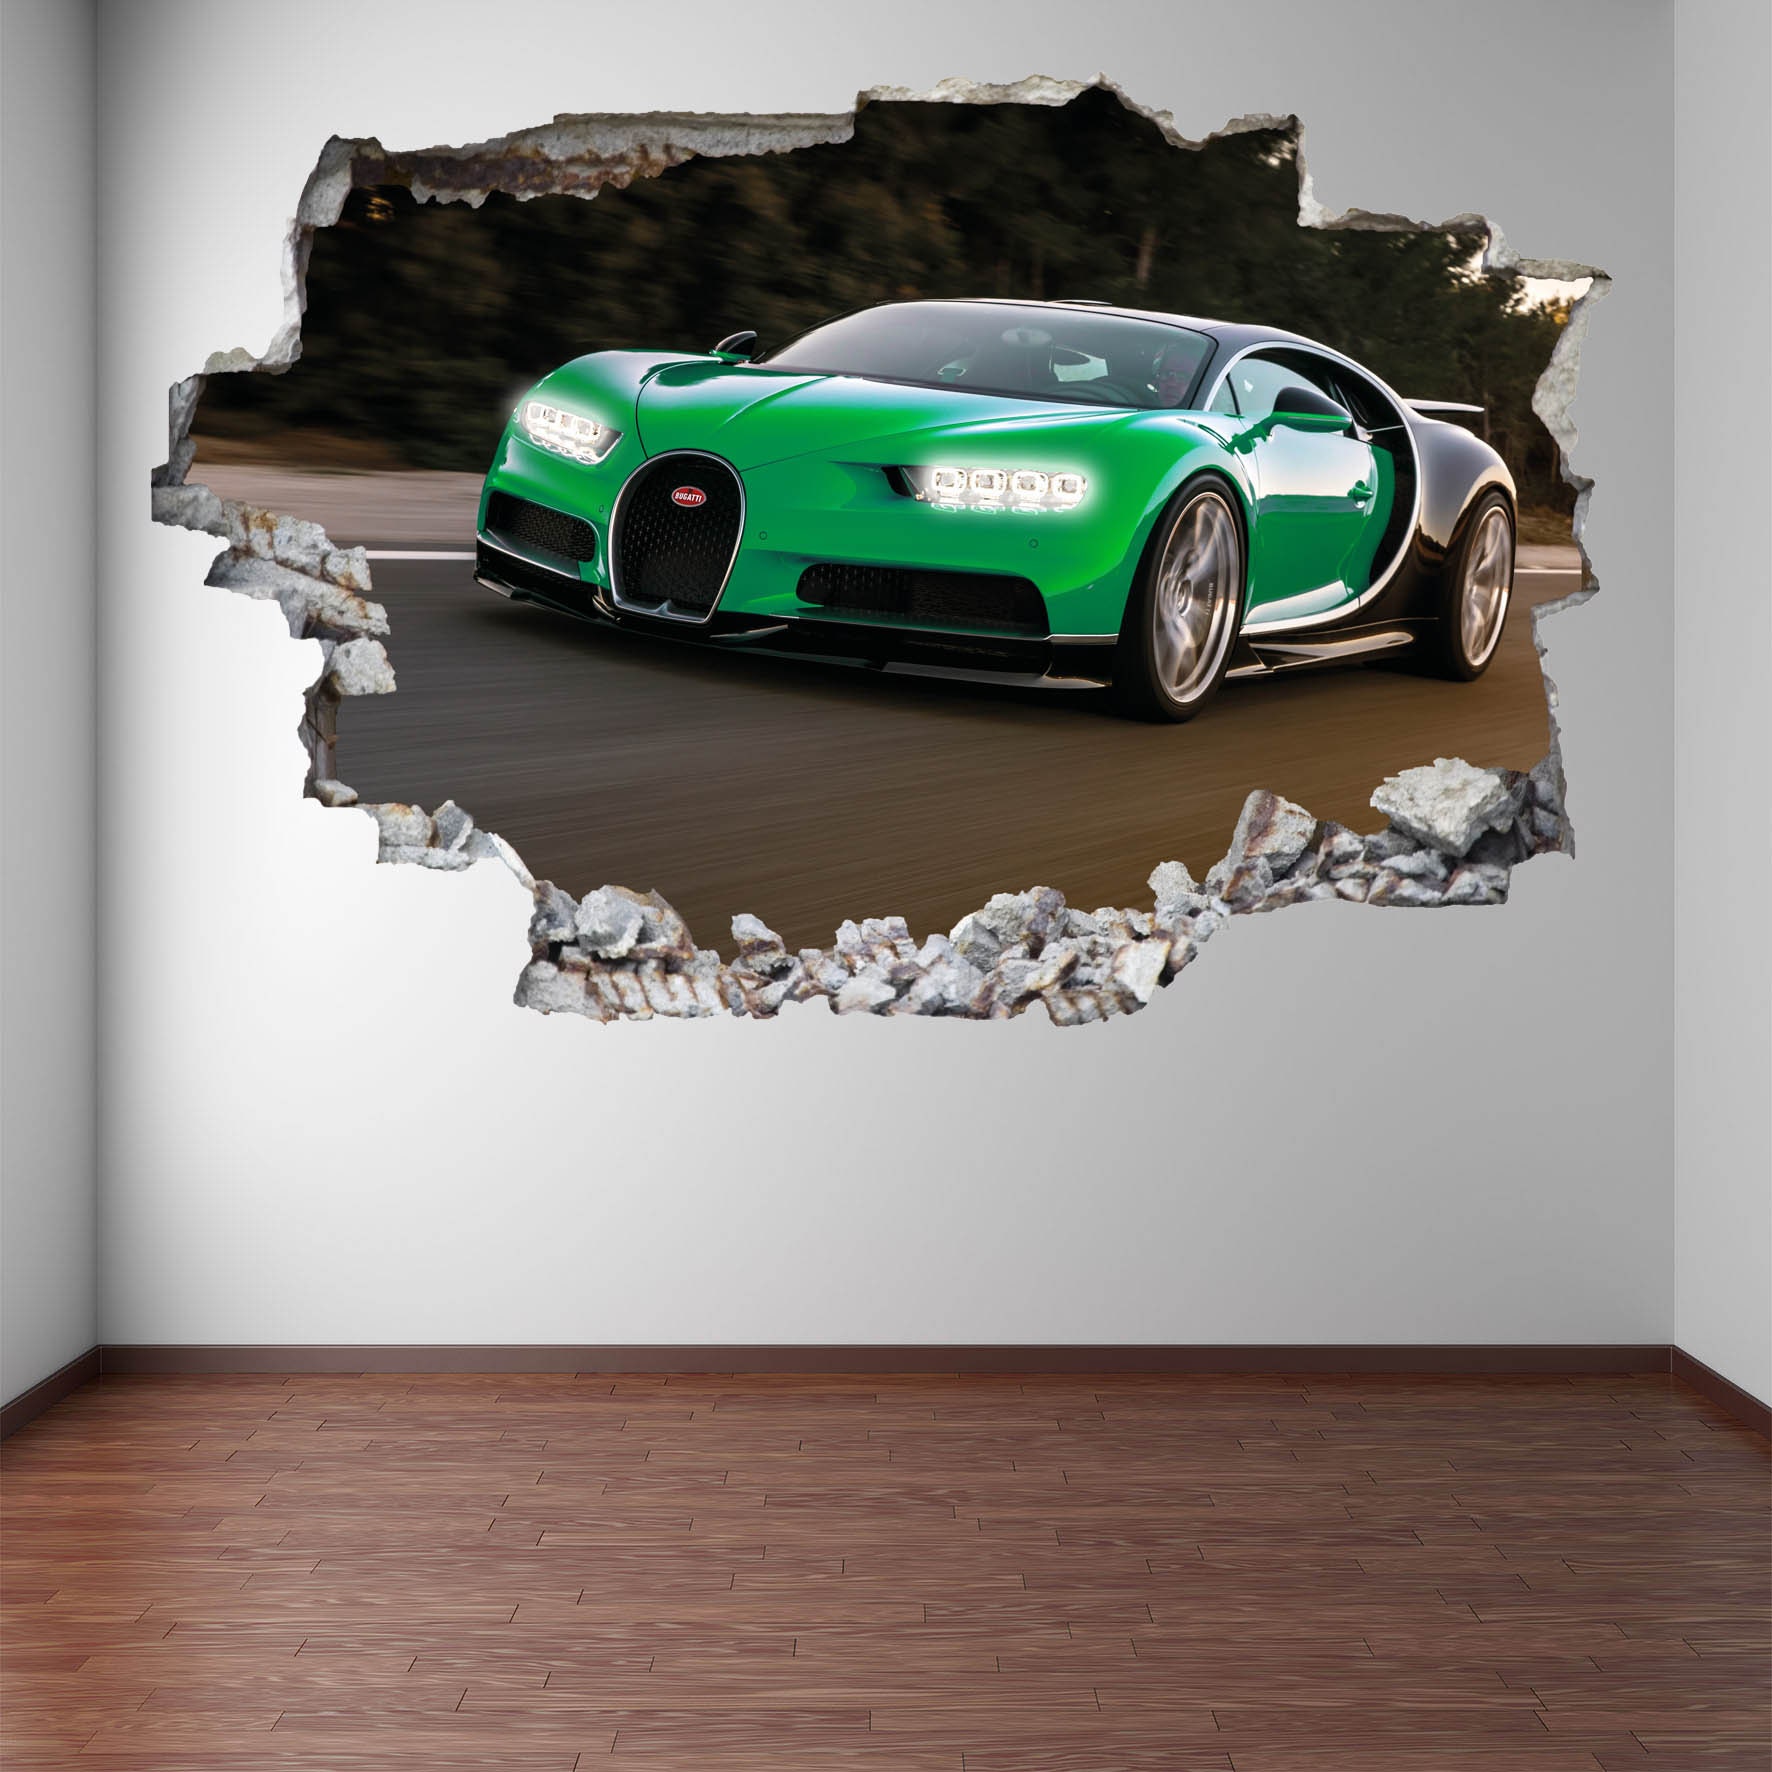 3D Bugatti Car Wall Sticker Art Decal Decor Kids Bedroom Decoration Vinyl Poster 